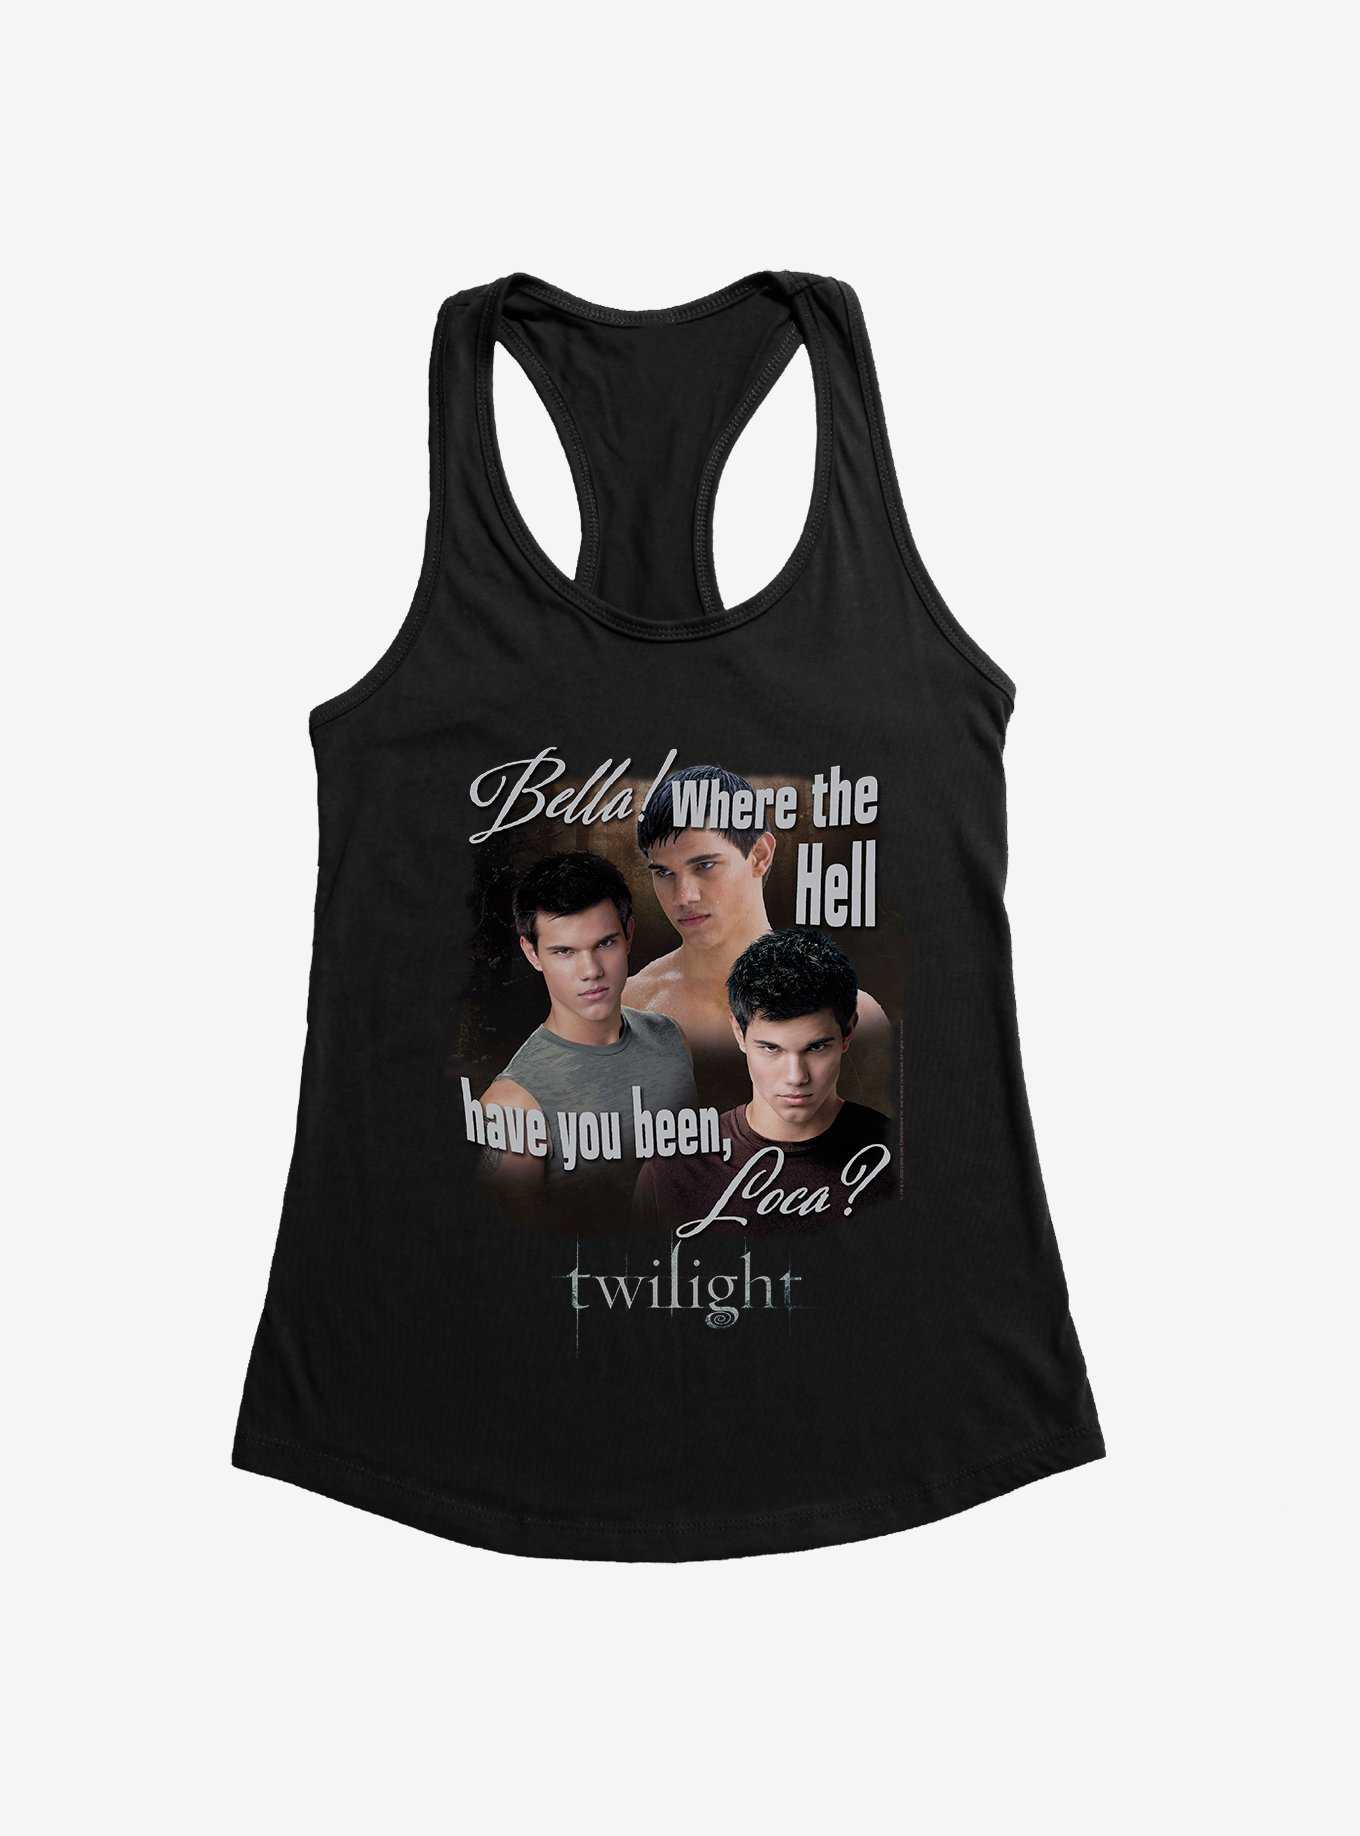 OFFICIAL Twilight Shirts & Merchandise